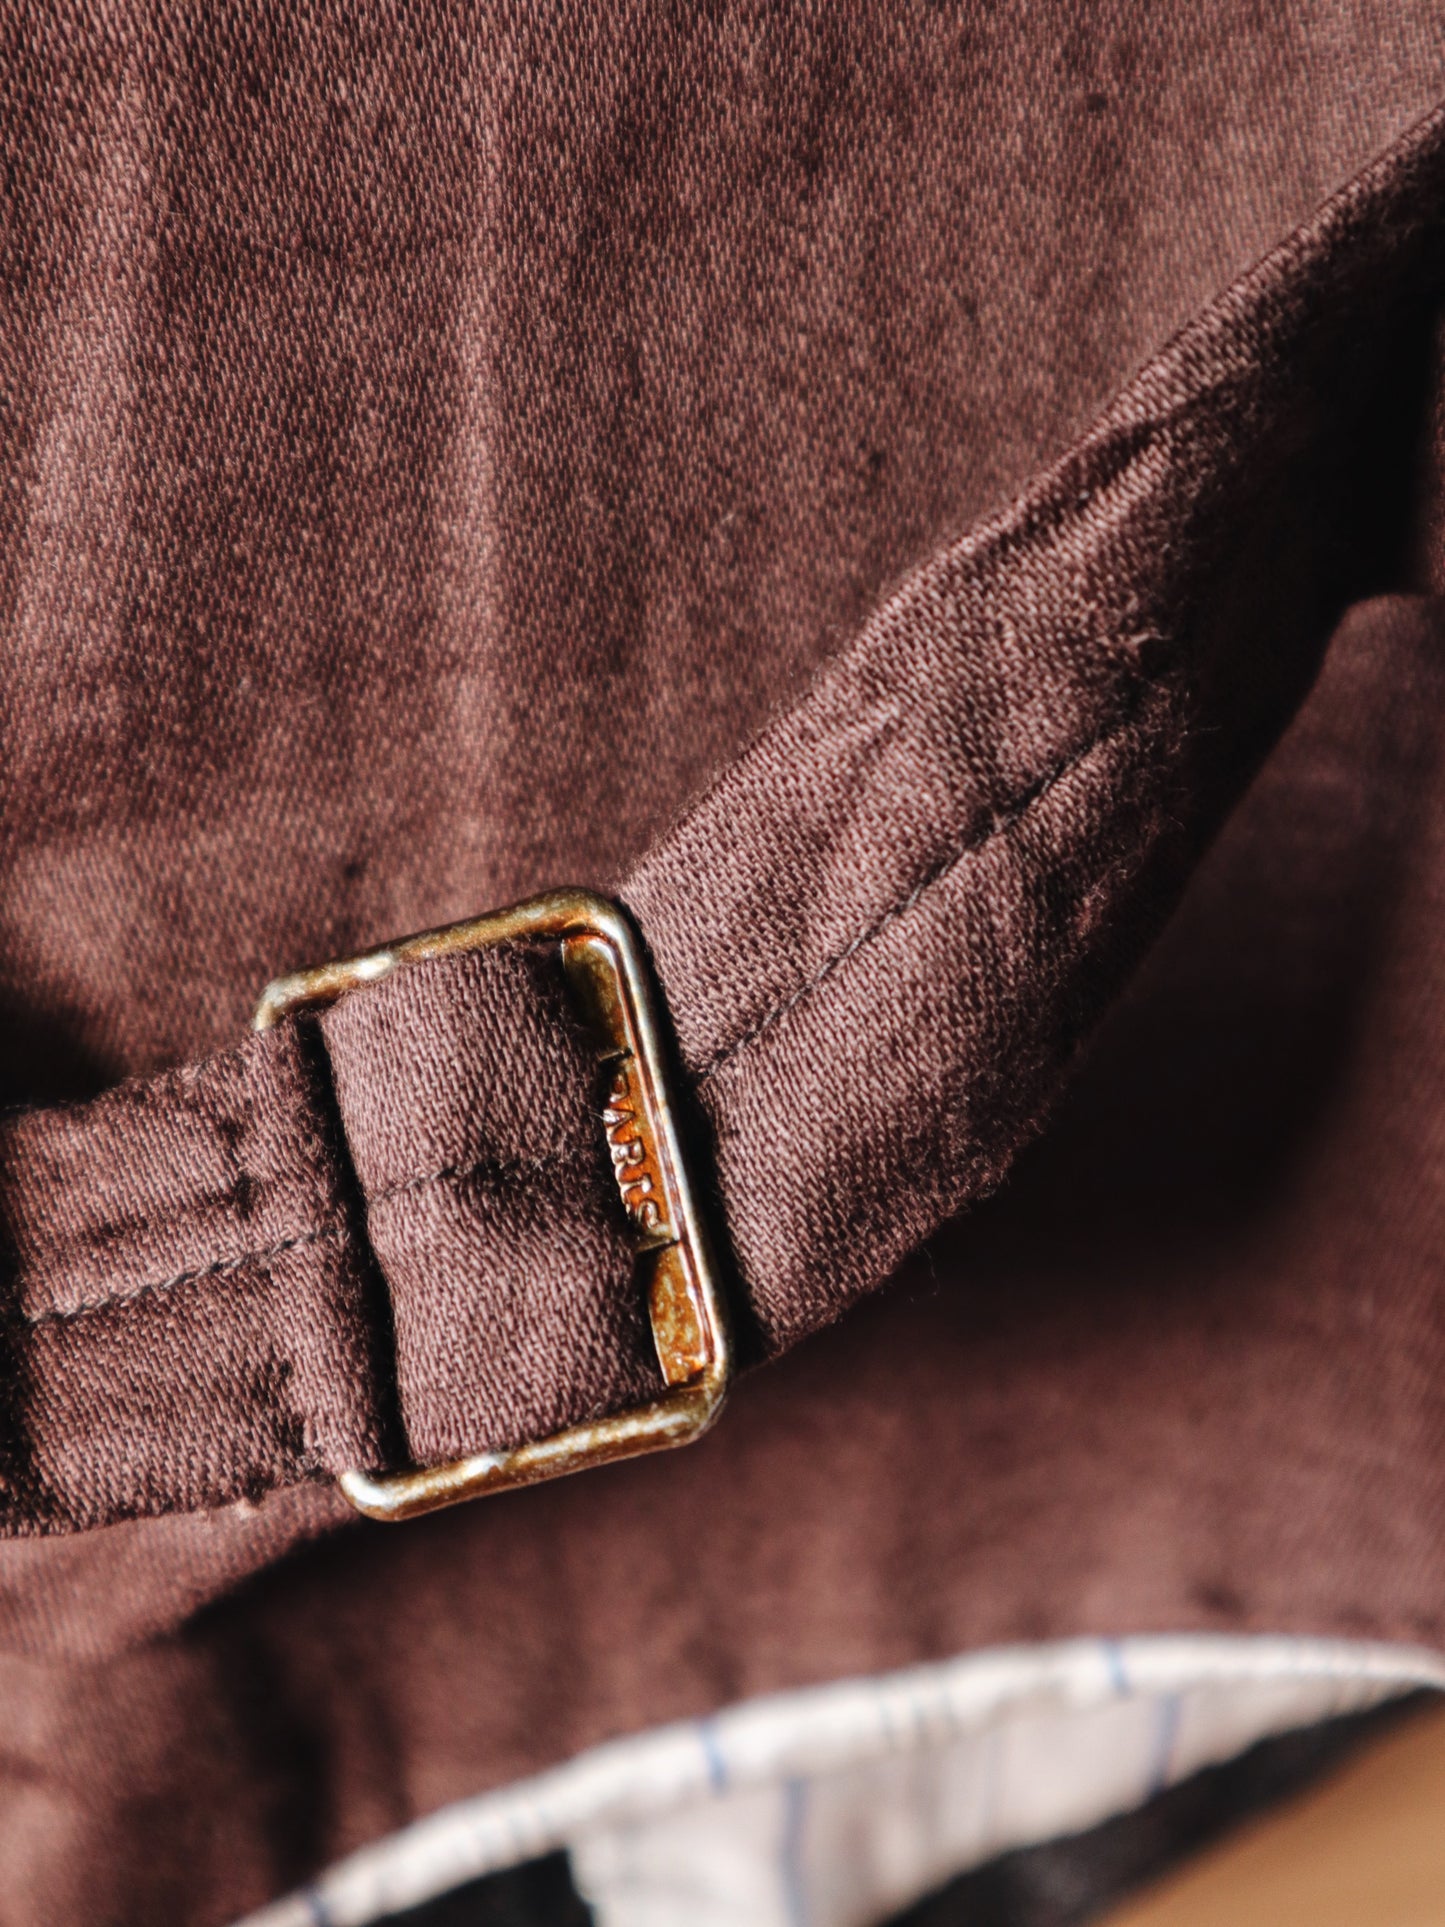 1940s French Wool Waistcoat Vest 法國條紋羊毛背心